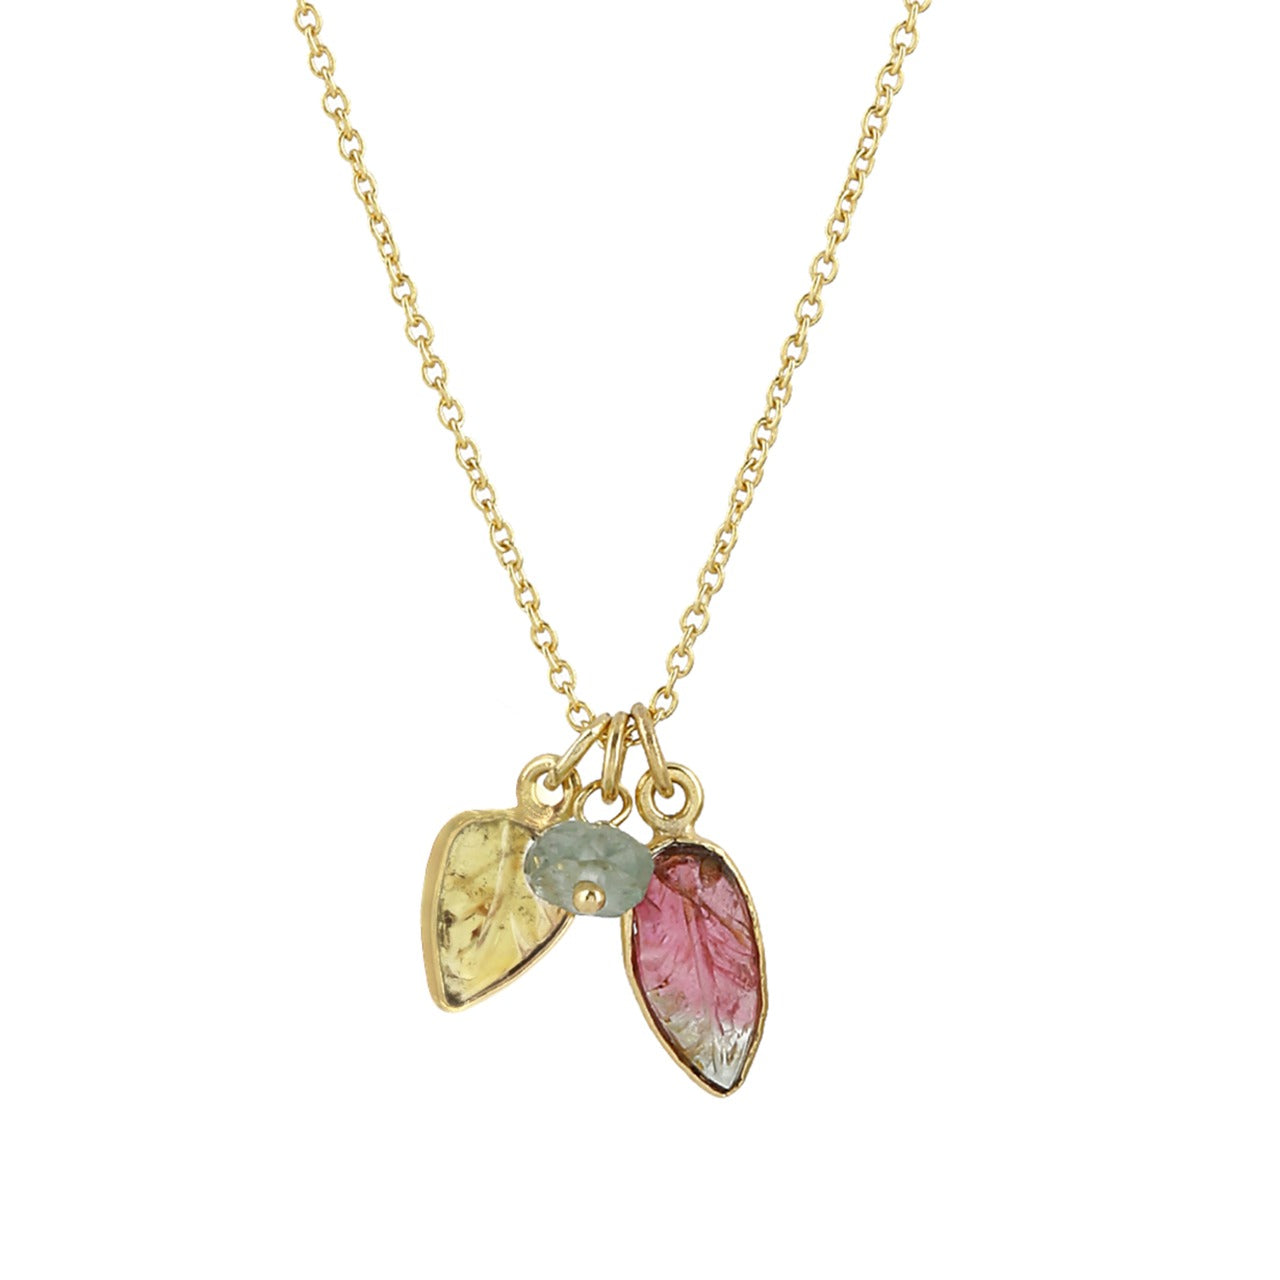 Lita Handcrafted 14 Kt gold tourmaline necklace